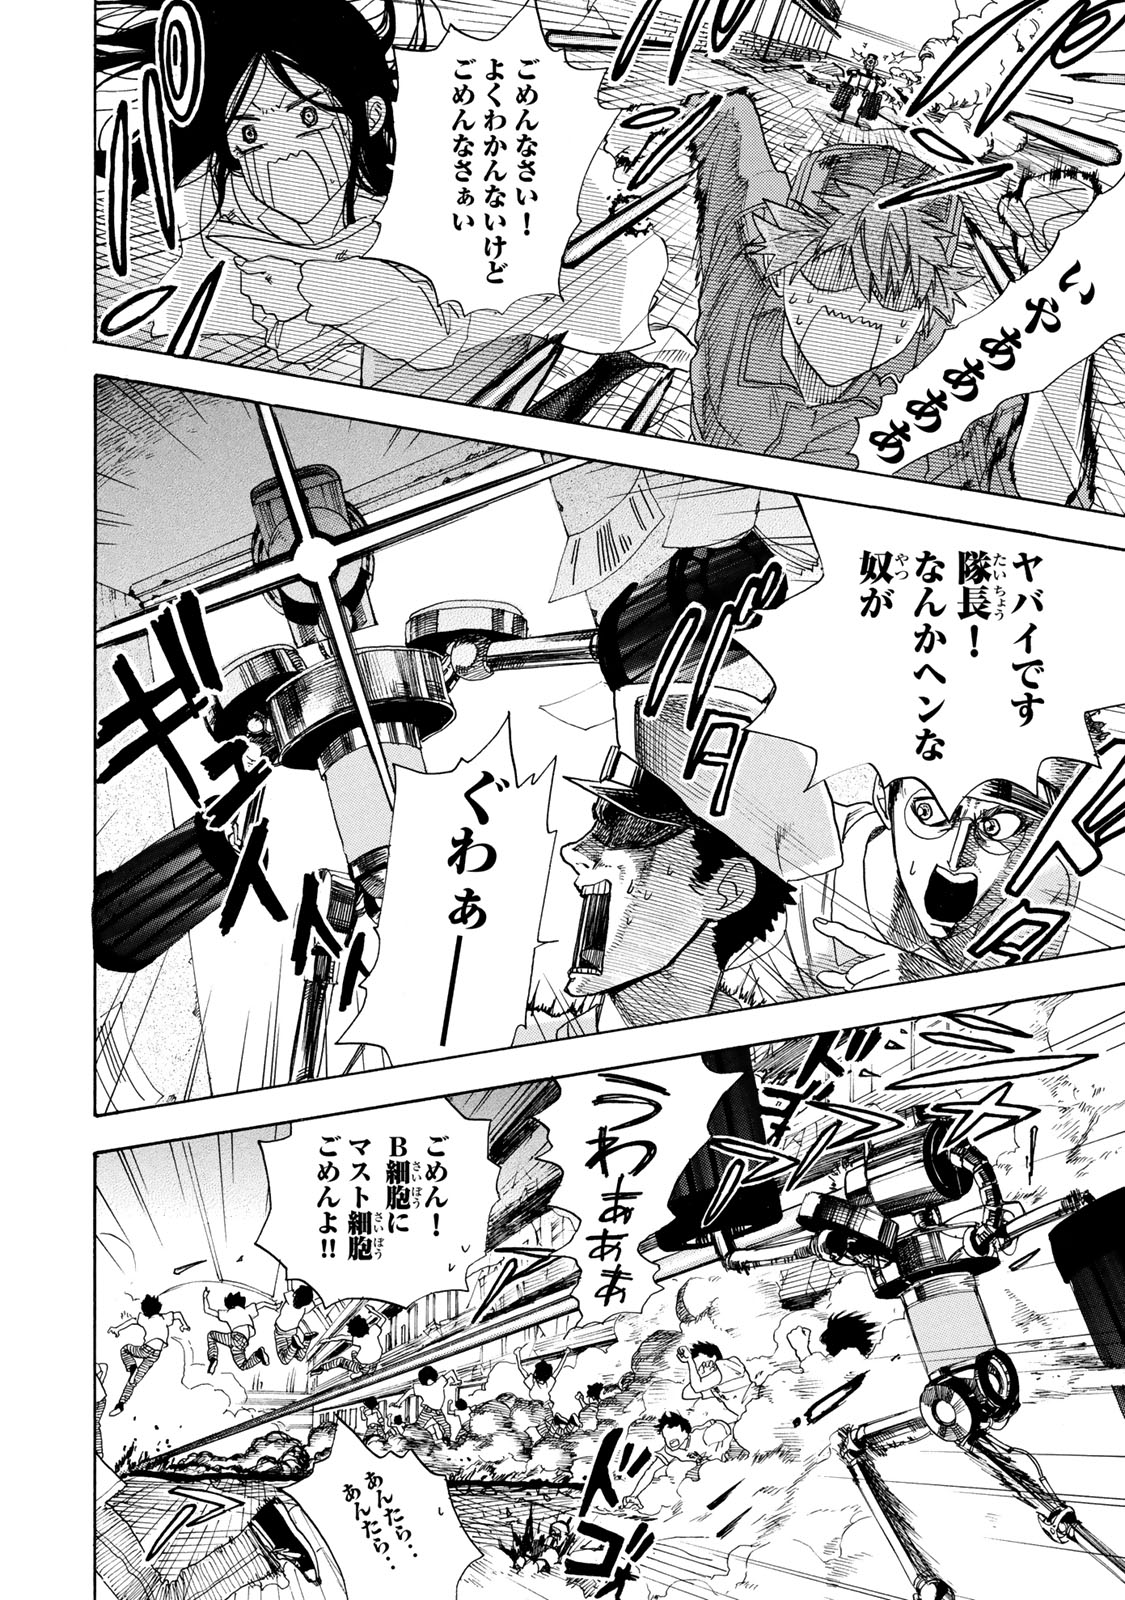 Hataraku Saibou - Chapter 2 - Page 38